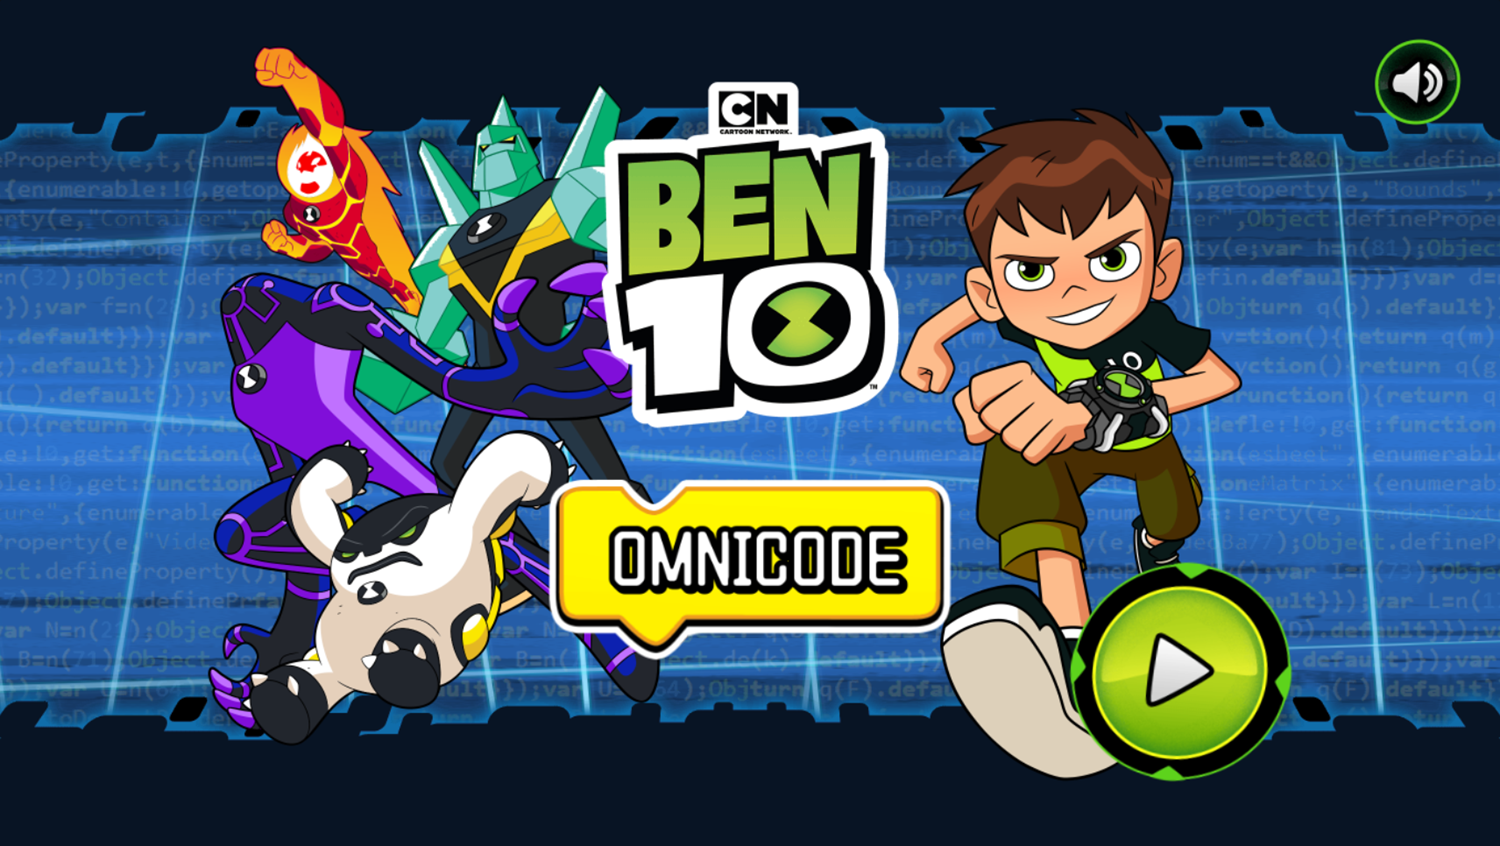 Ben 10 Omnicode Game Welcome Screen Screenshot.